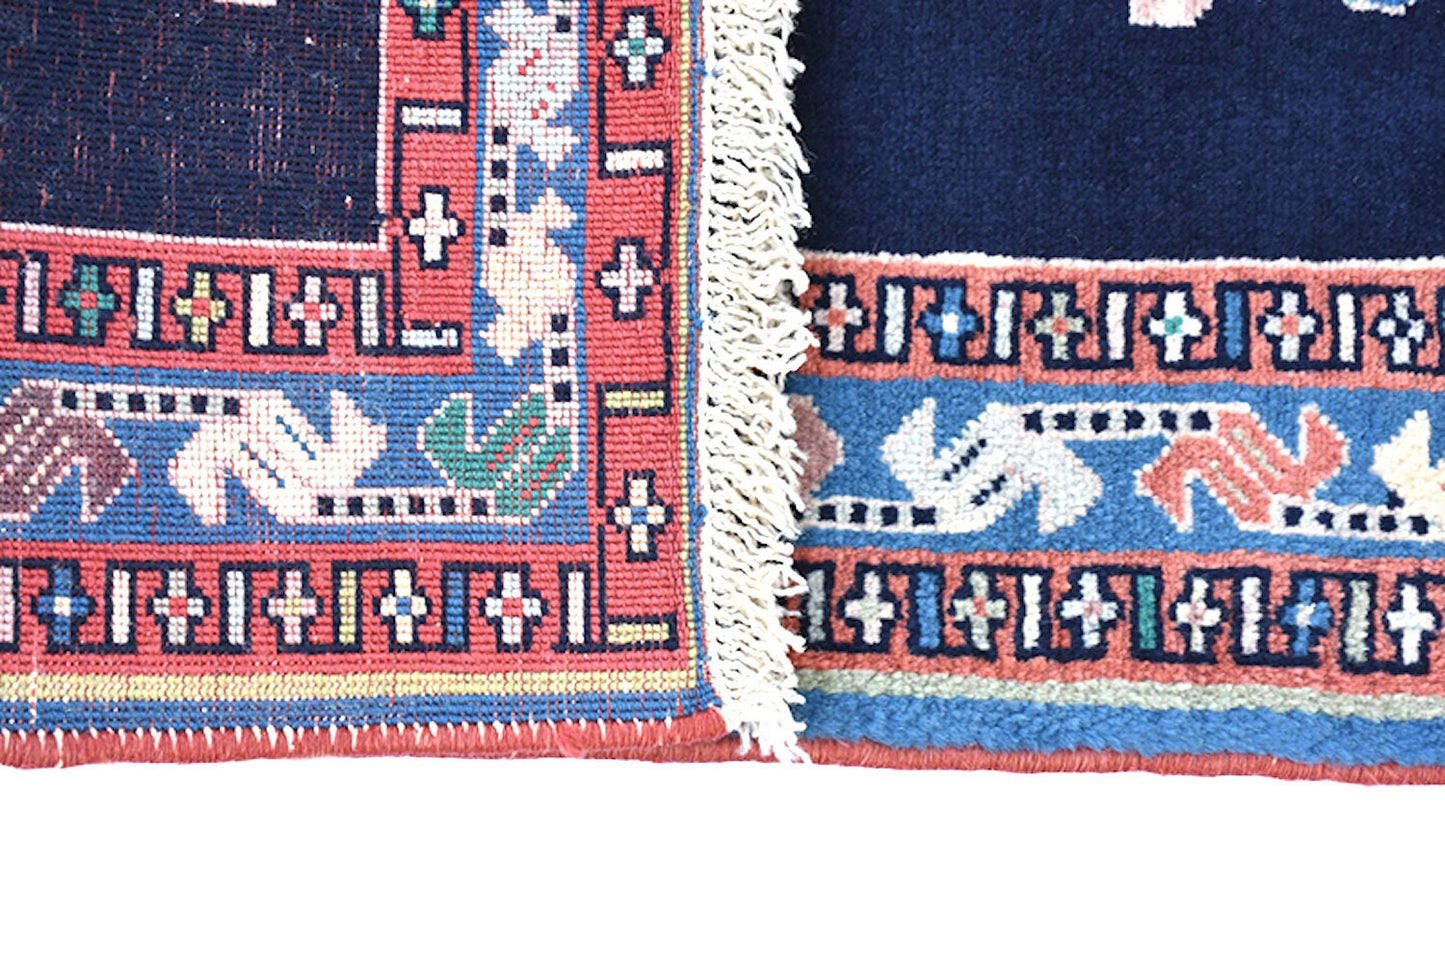 Floral Vintage Rug | 2 x 3 Rug | Small Persian Turkish Rug | Handmade Rug | Colorful Border | Black Background Wool Rug